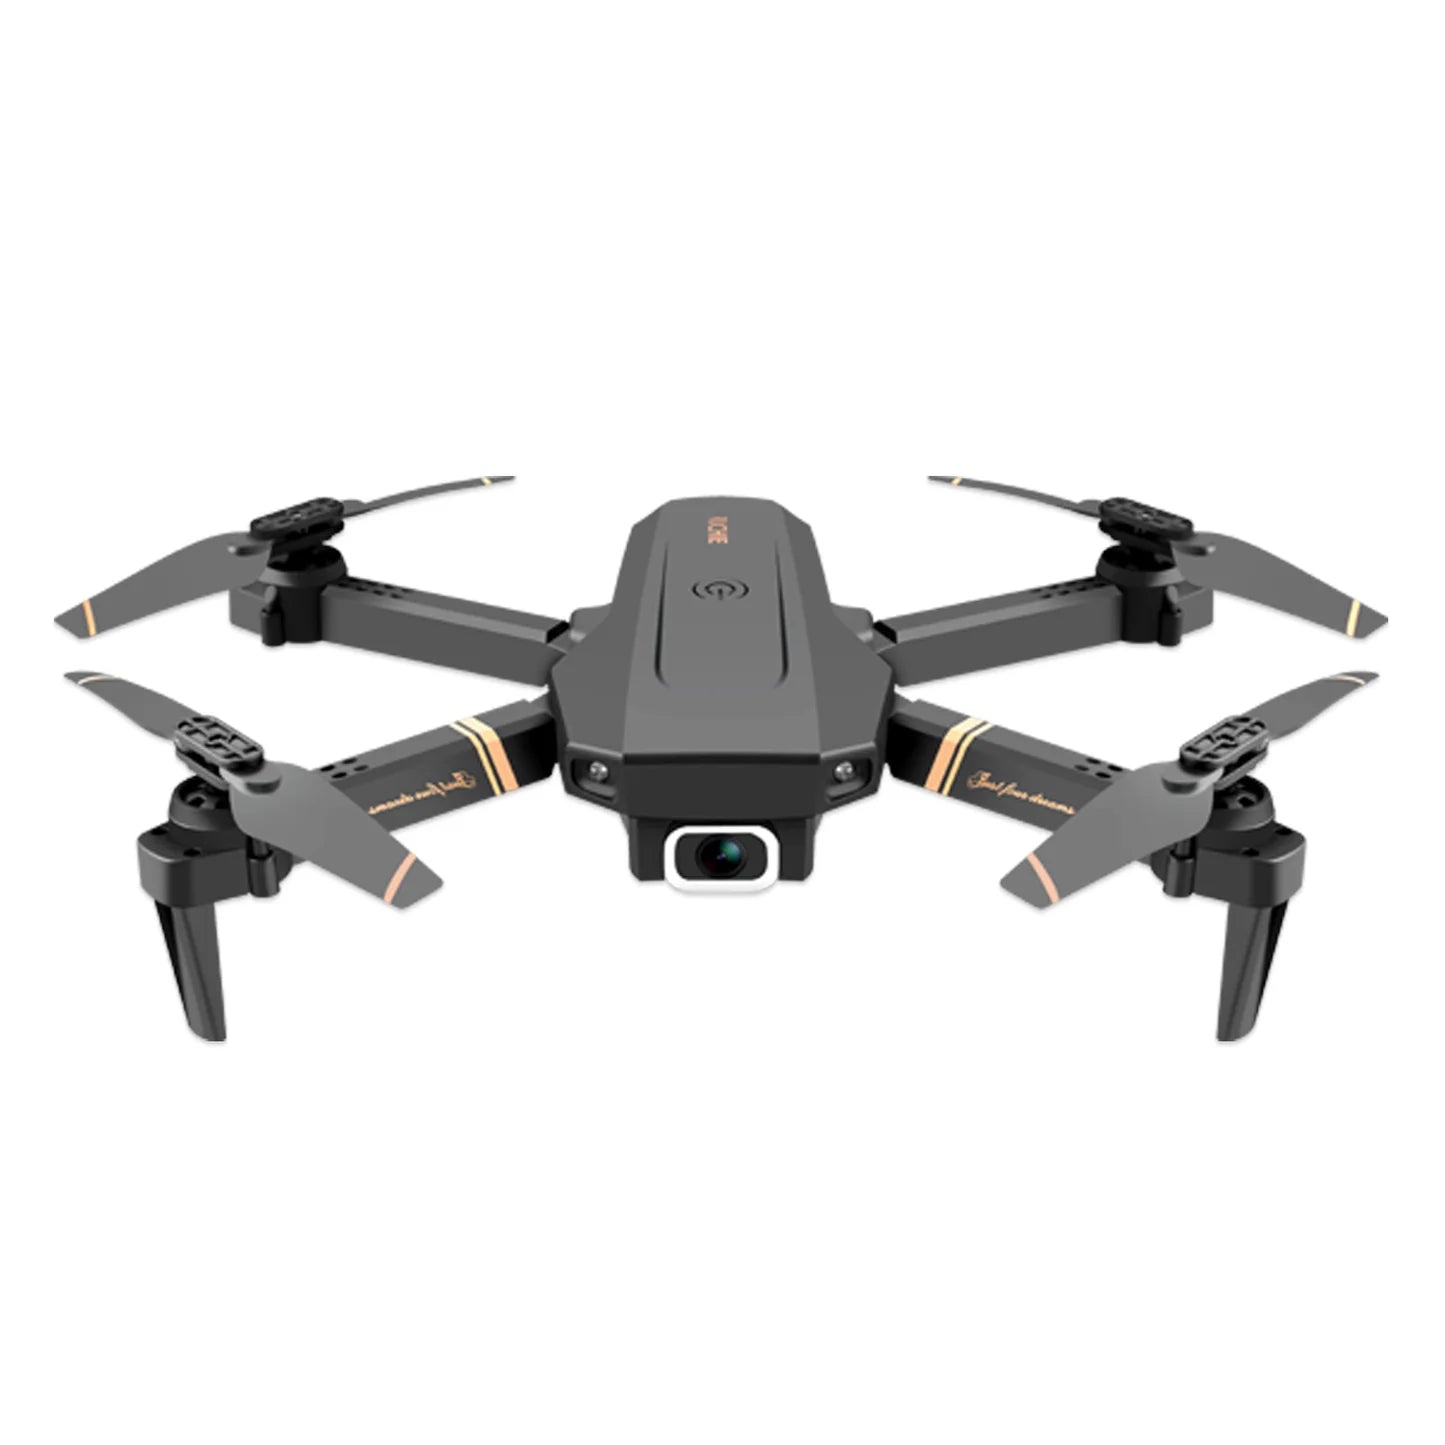 V4 遙控無人機 - 4k 高清廣角相機 1080P WiFi fpv 無人機雙鏡頭四軸飛行器即時傳輸直升機無人機禮物玩具